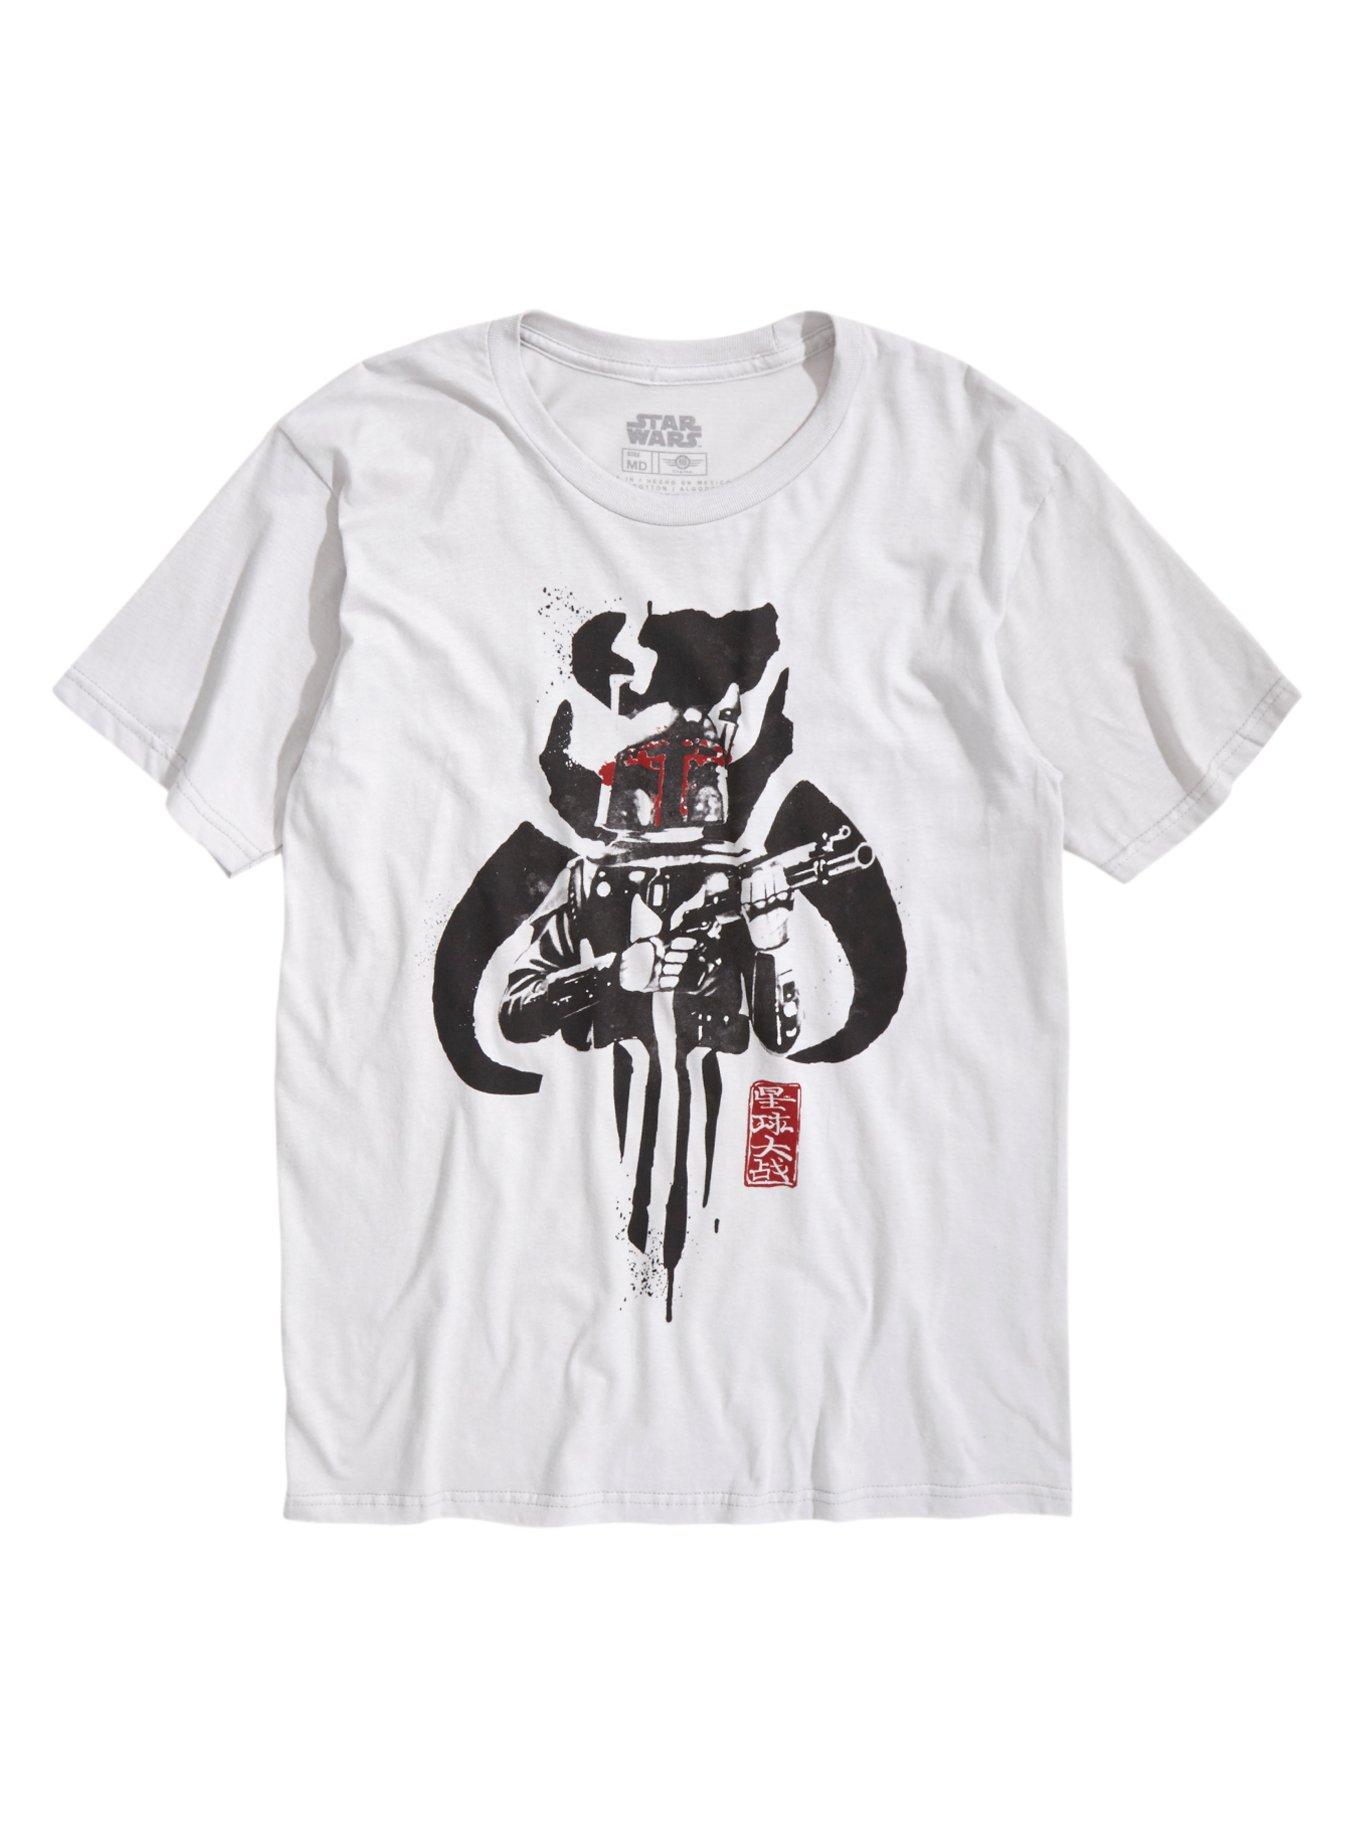 Star Wars Boba Fett Japan T-Shirt | Hot Topic